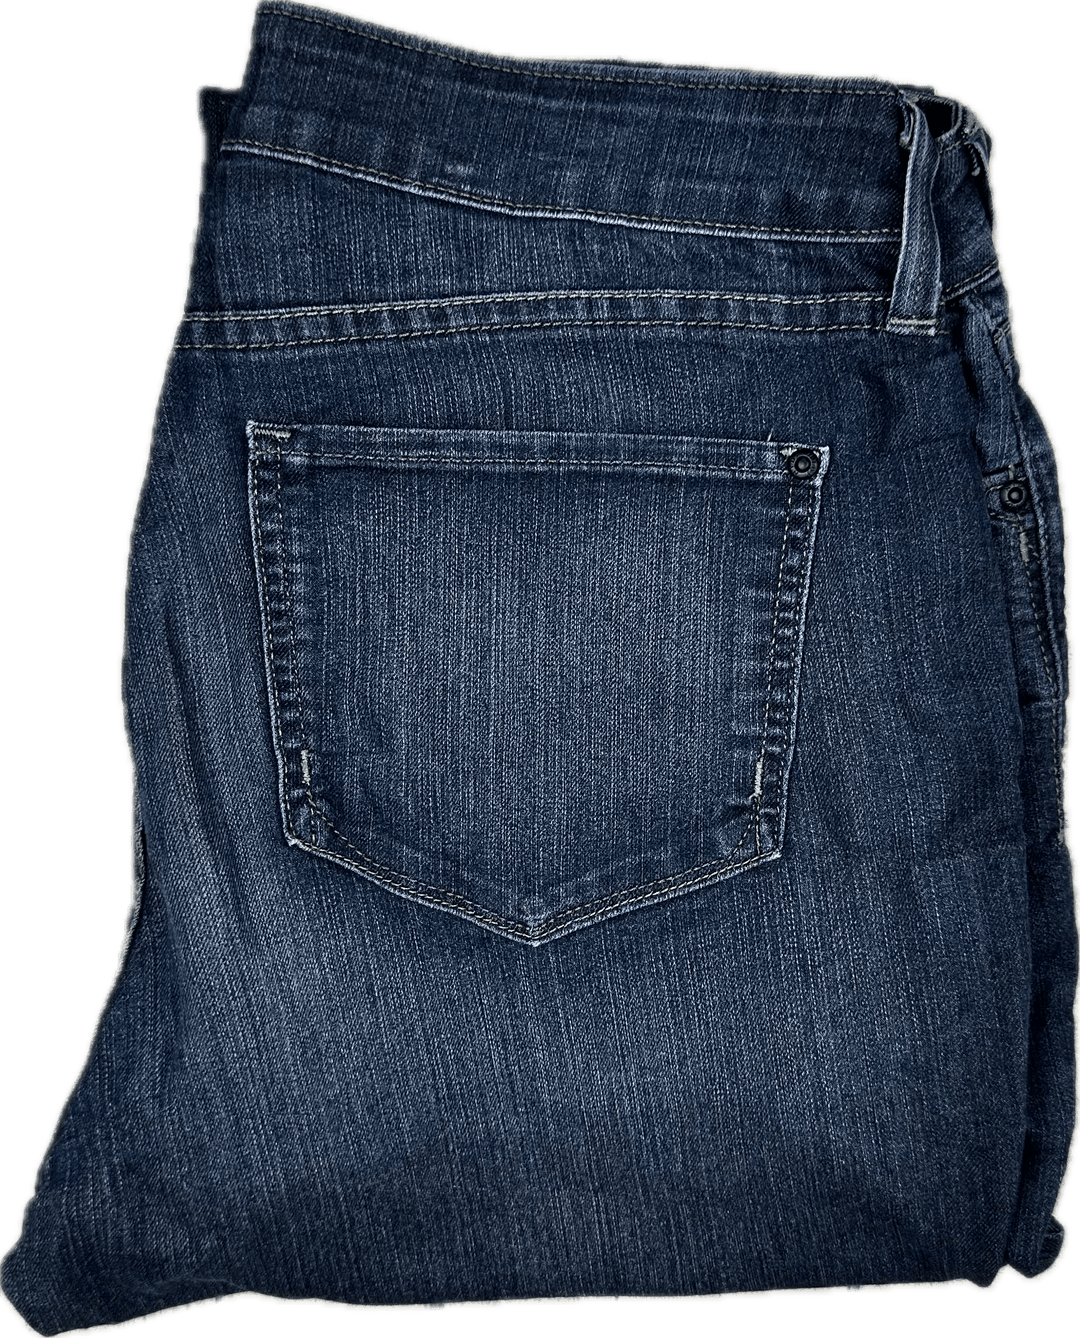 NYDJ Lift & Tuck 'Straight' Jeans -Size 12 US or 16 AU - Jean Pool